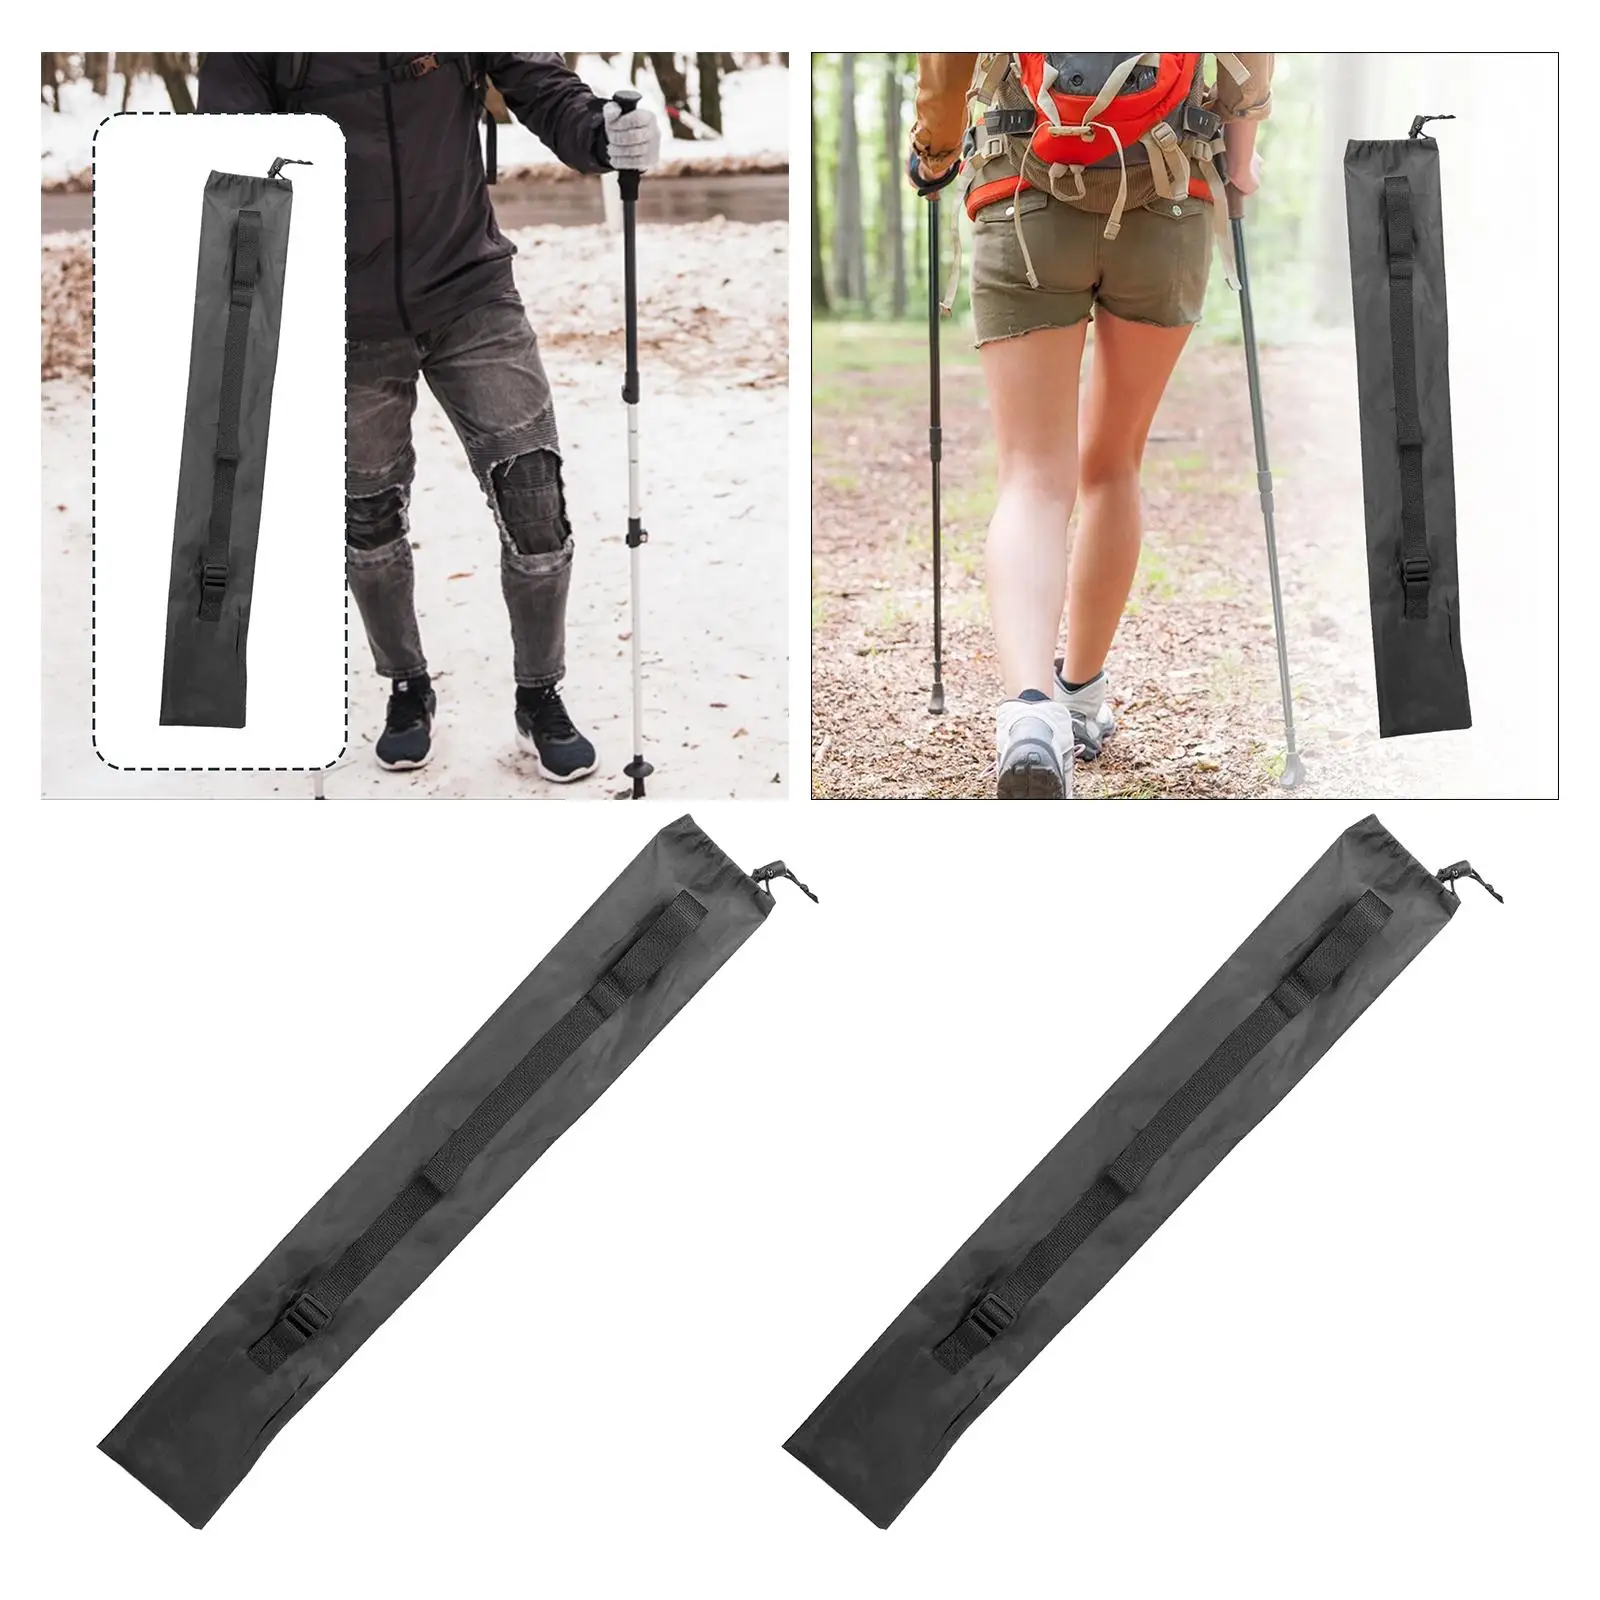 Portable Carrying Bag Storage Bag Pouch for Walking Sticks Trekking Hiking Poles, Black Color